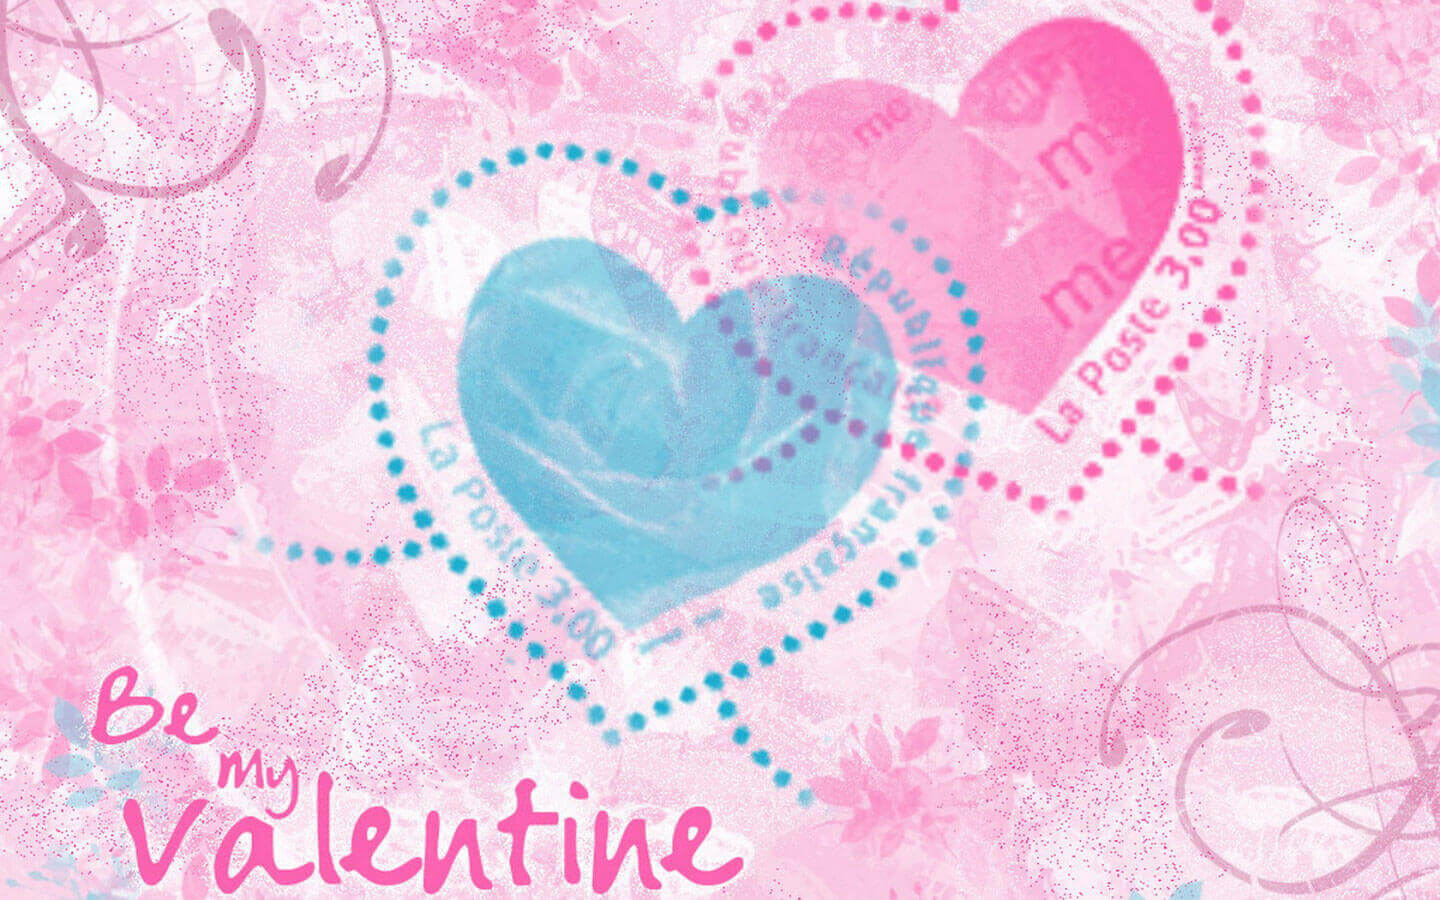 Be-my-valentine-hd-wallpaper-download-free-3